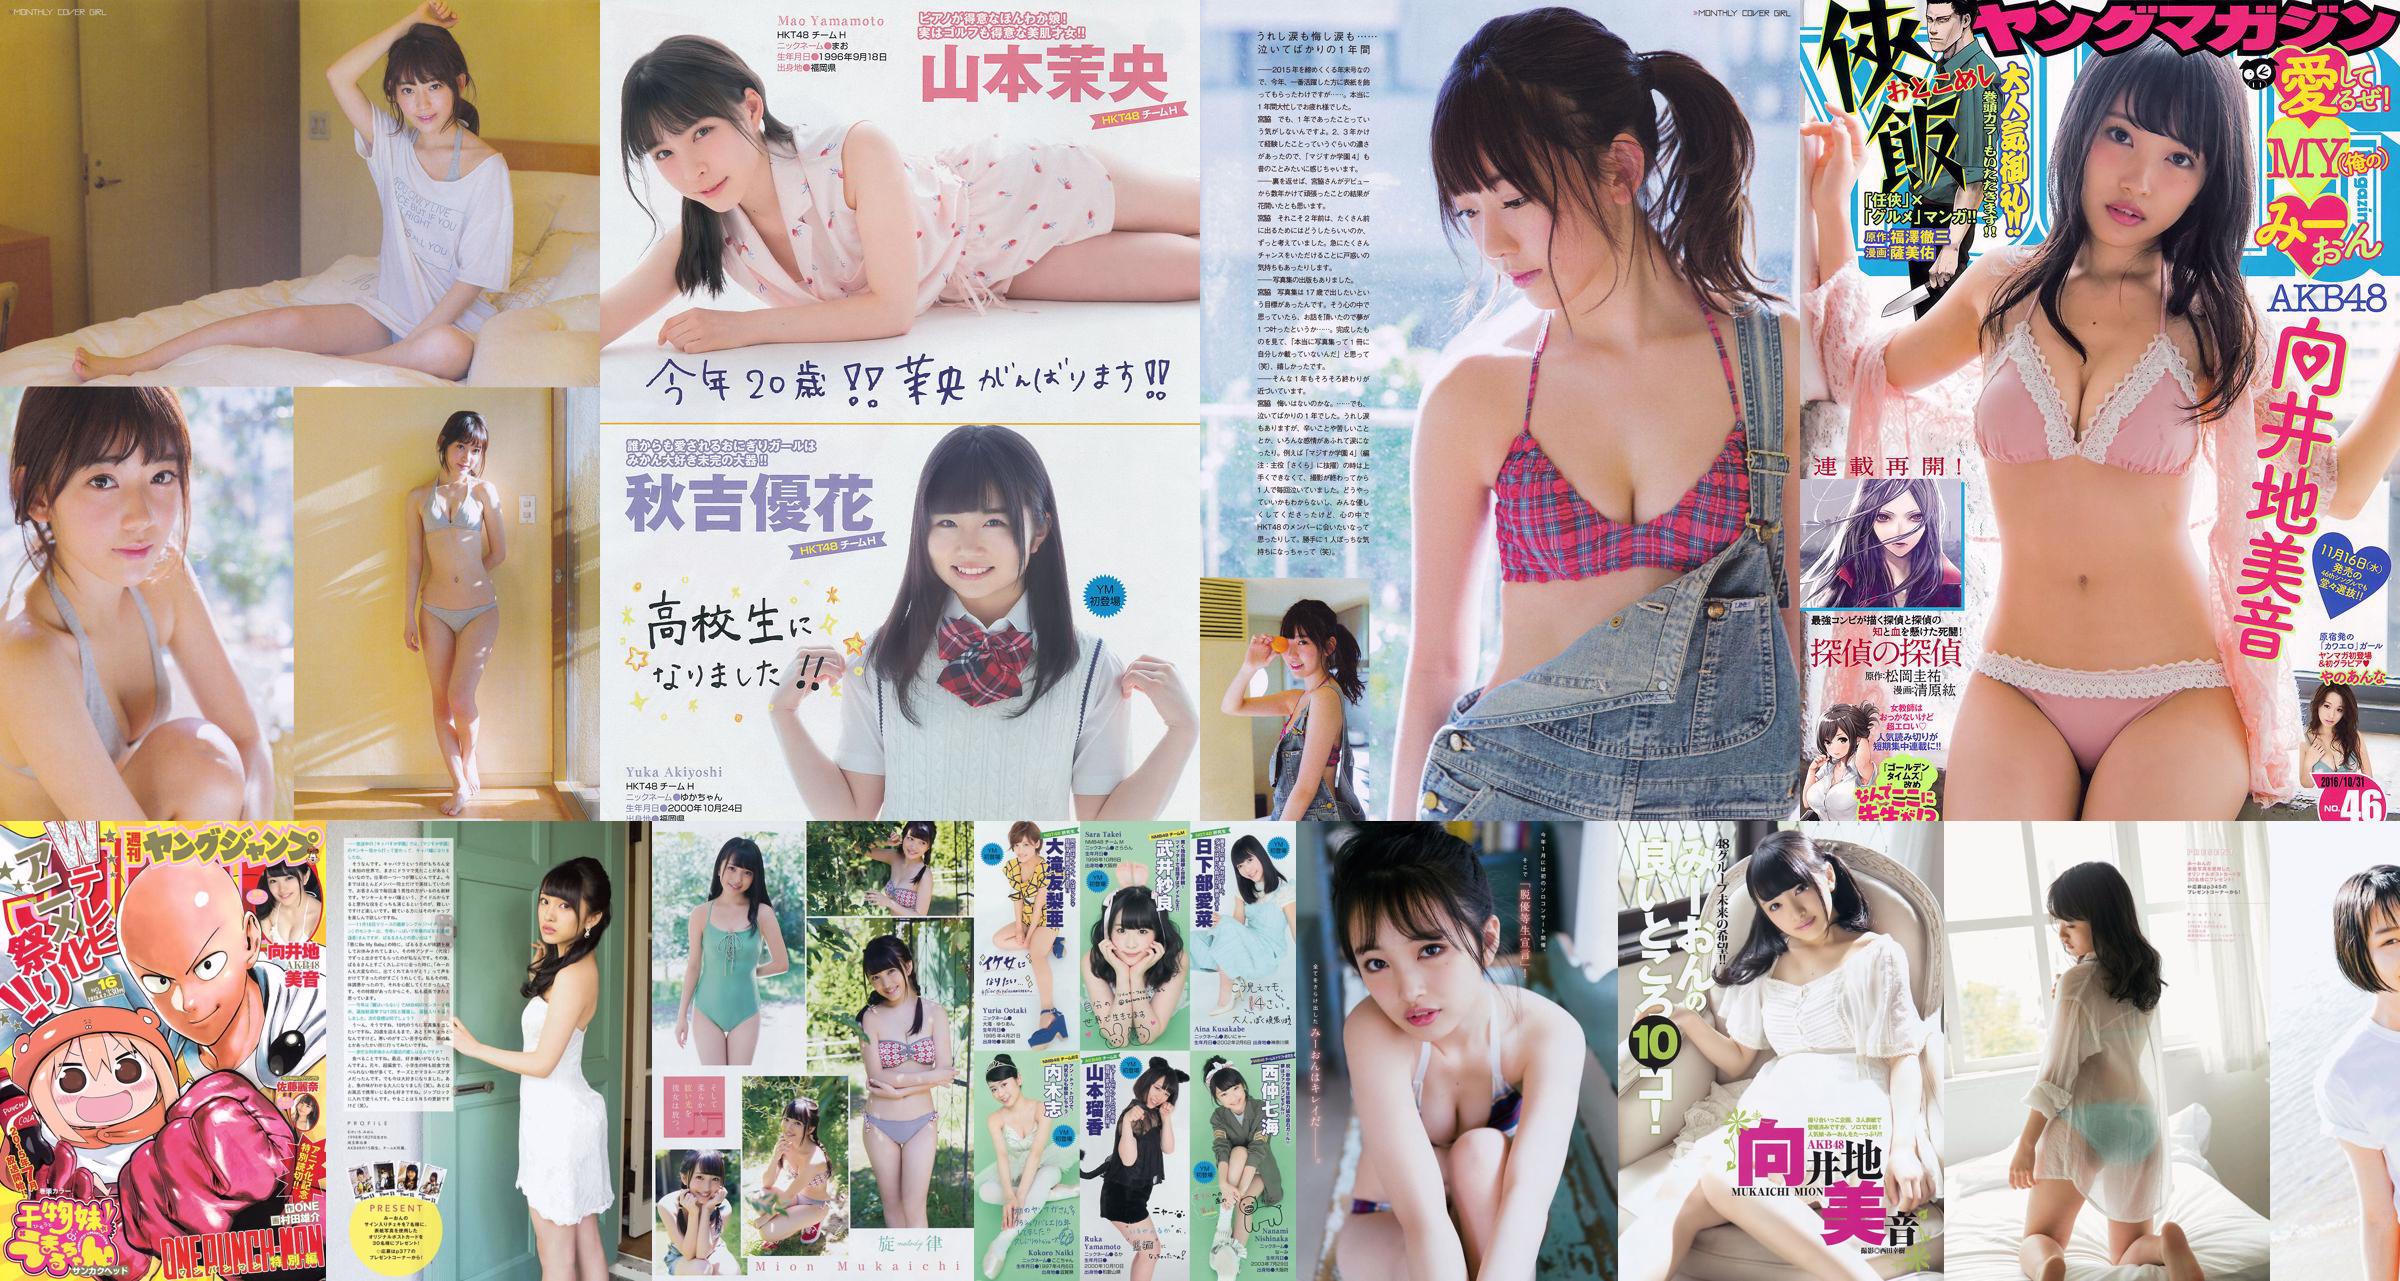 [Young Magazine] Mukaiji nr 28 Photo Magazine 2016 No.5f4419 Strona 11